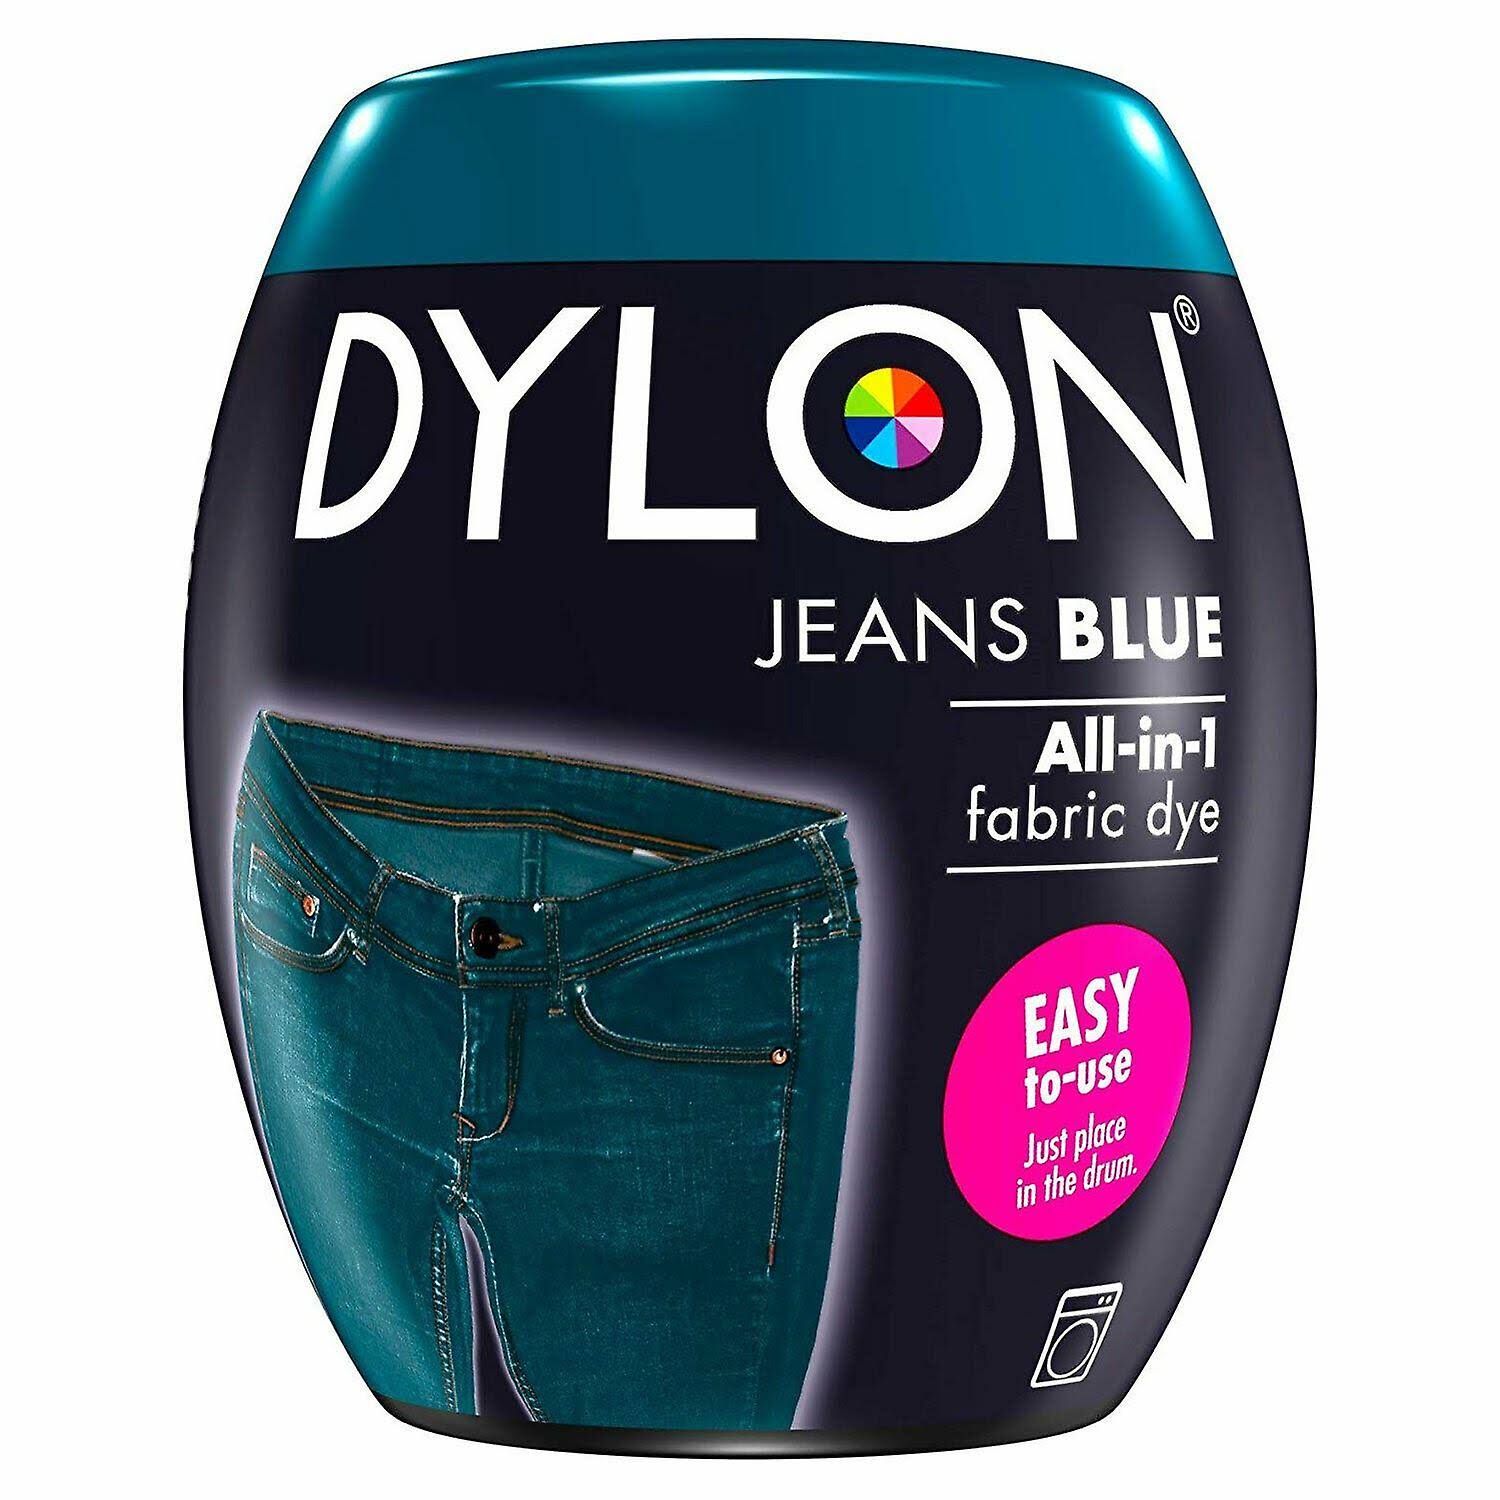 Dylon All in 1 Fabric Dye - Jeans Blue, 350g